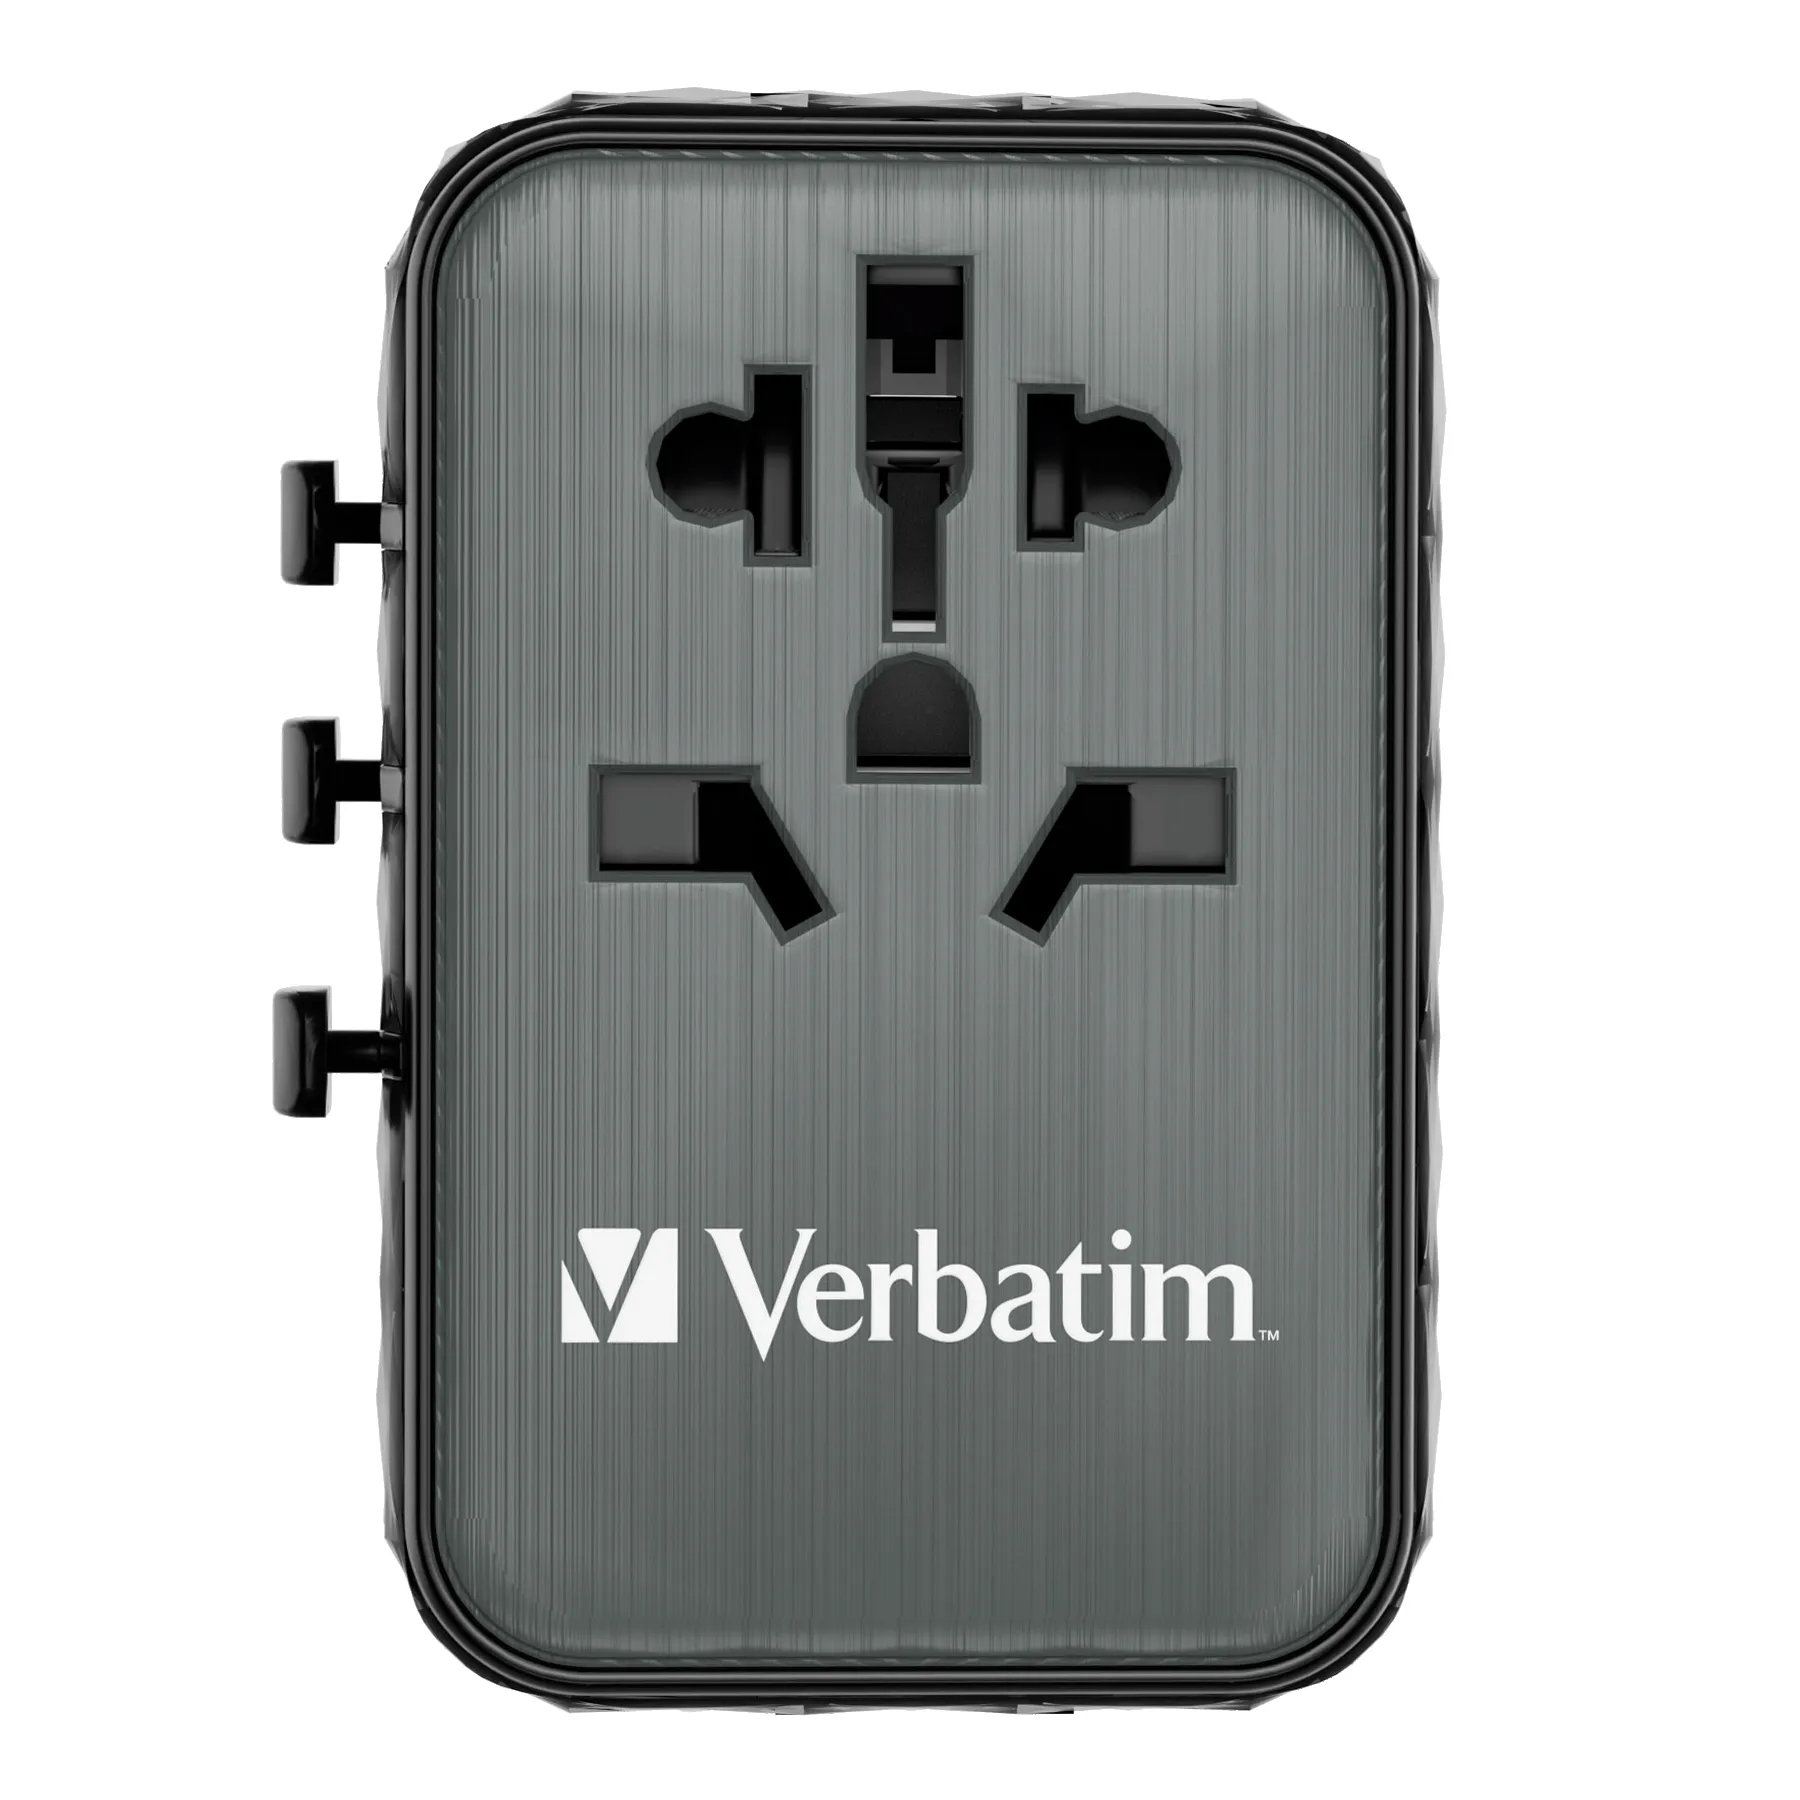 Vente Verbatim UTA-05 Verbatim au meilleur prix - visuel 8